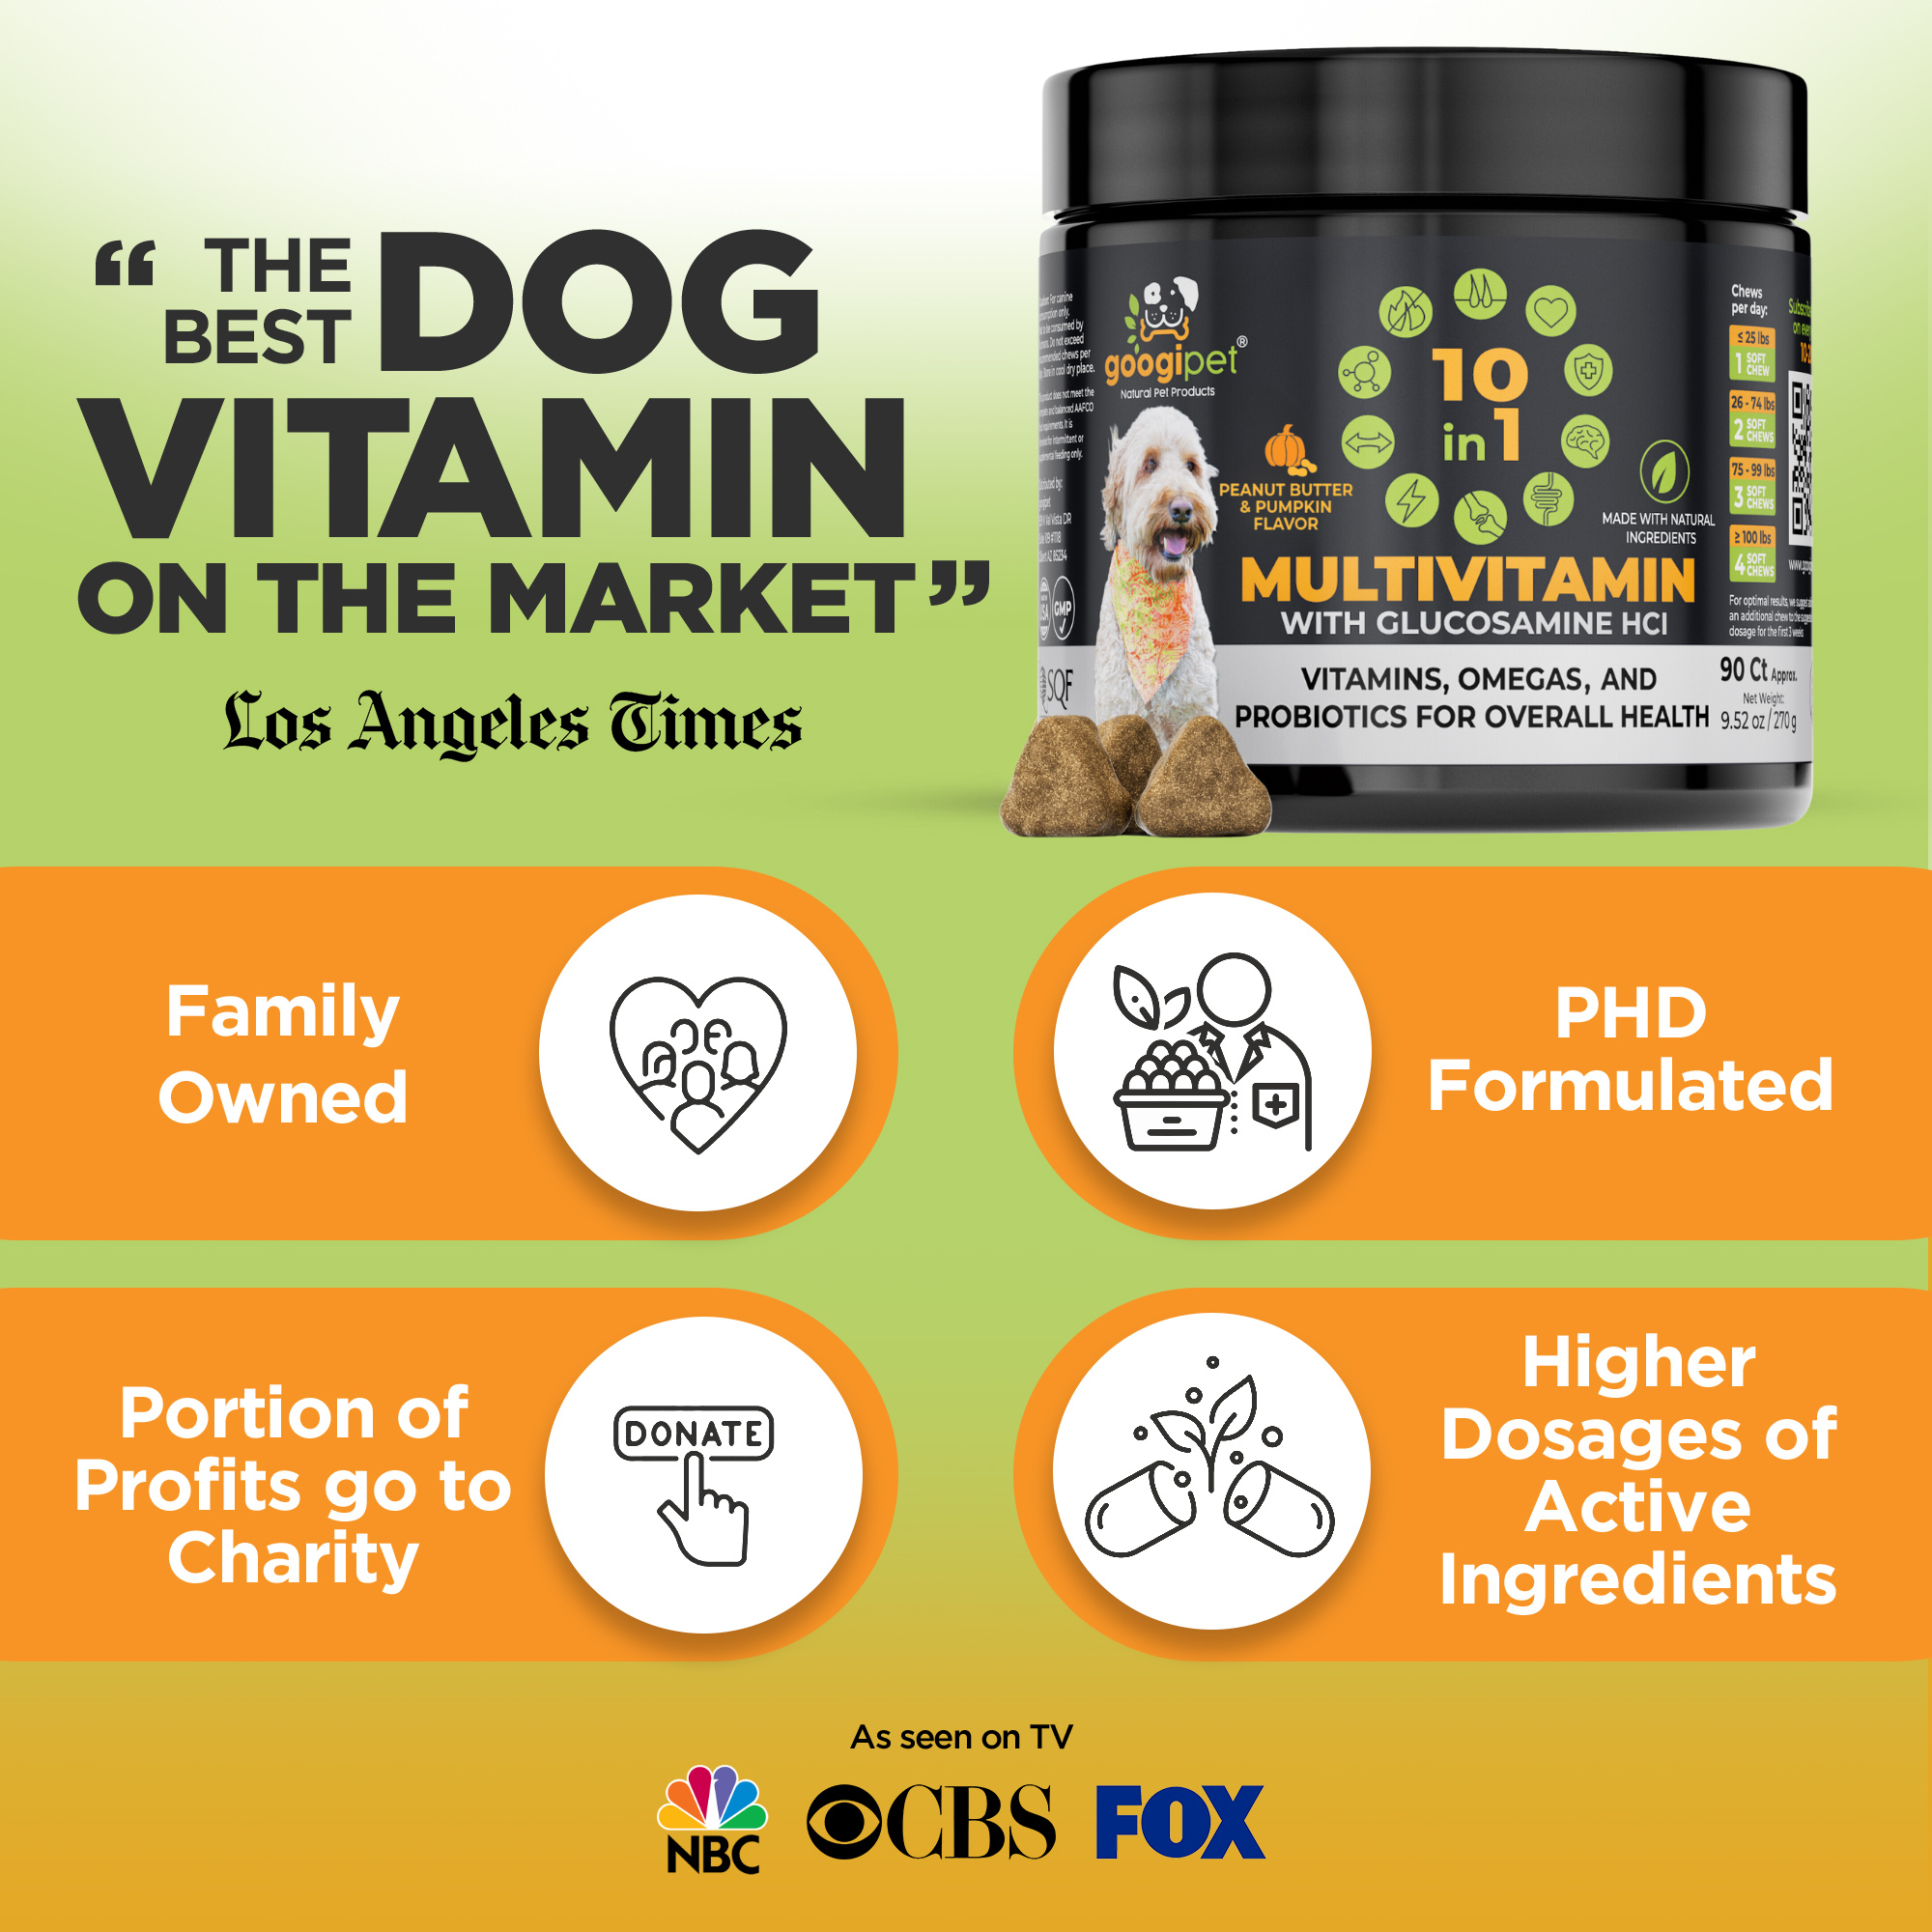 10 in 1 Multivitamin Chews for Dogs (Peanut Butter & Pumpkin Flavor)